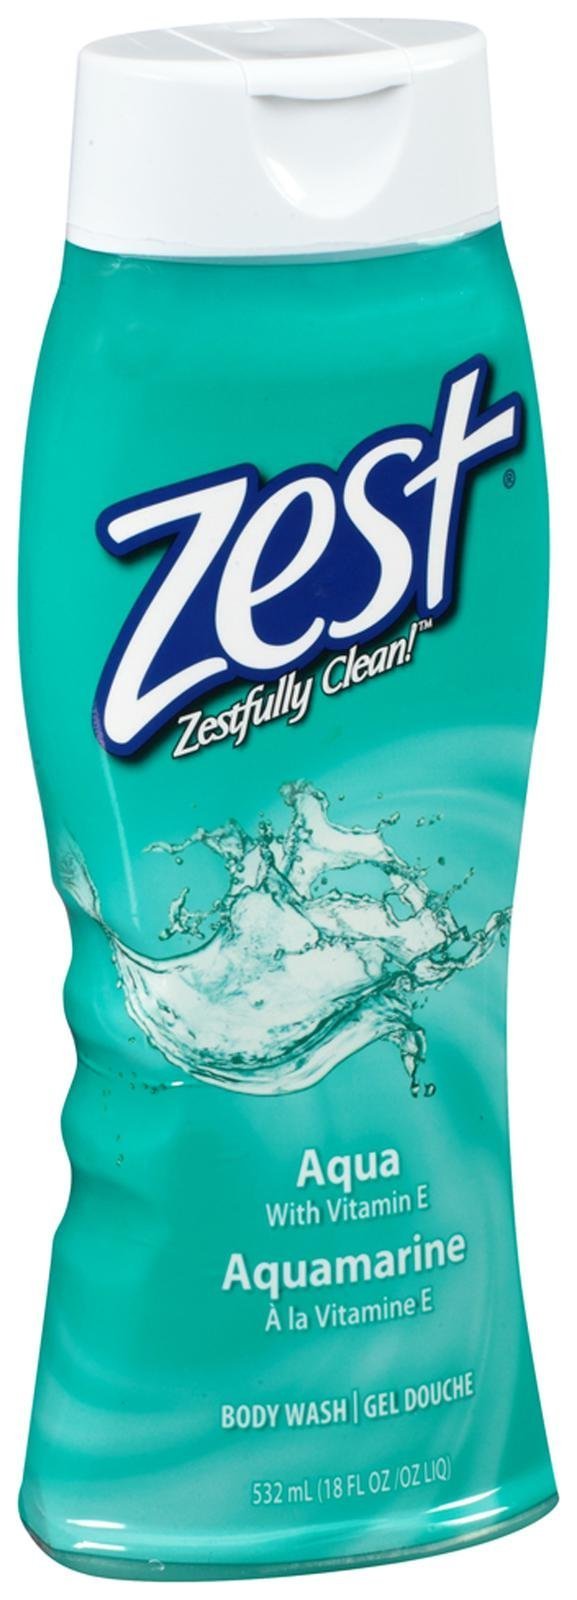 Zest Body Wash Aqua 18 fl oz for $3.69 + Free ship with $25 or Prime